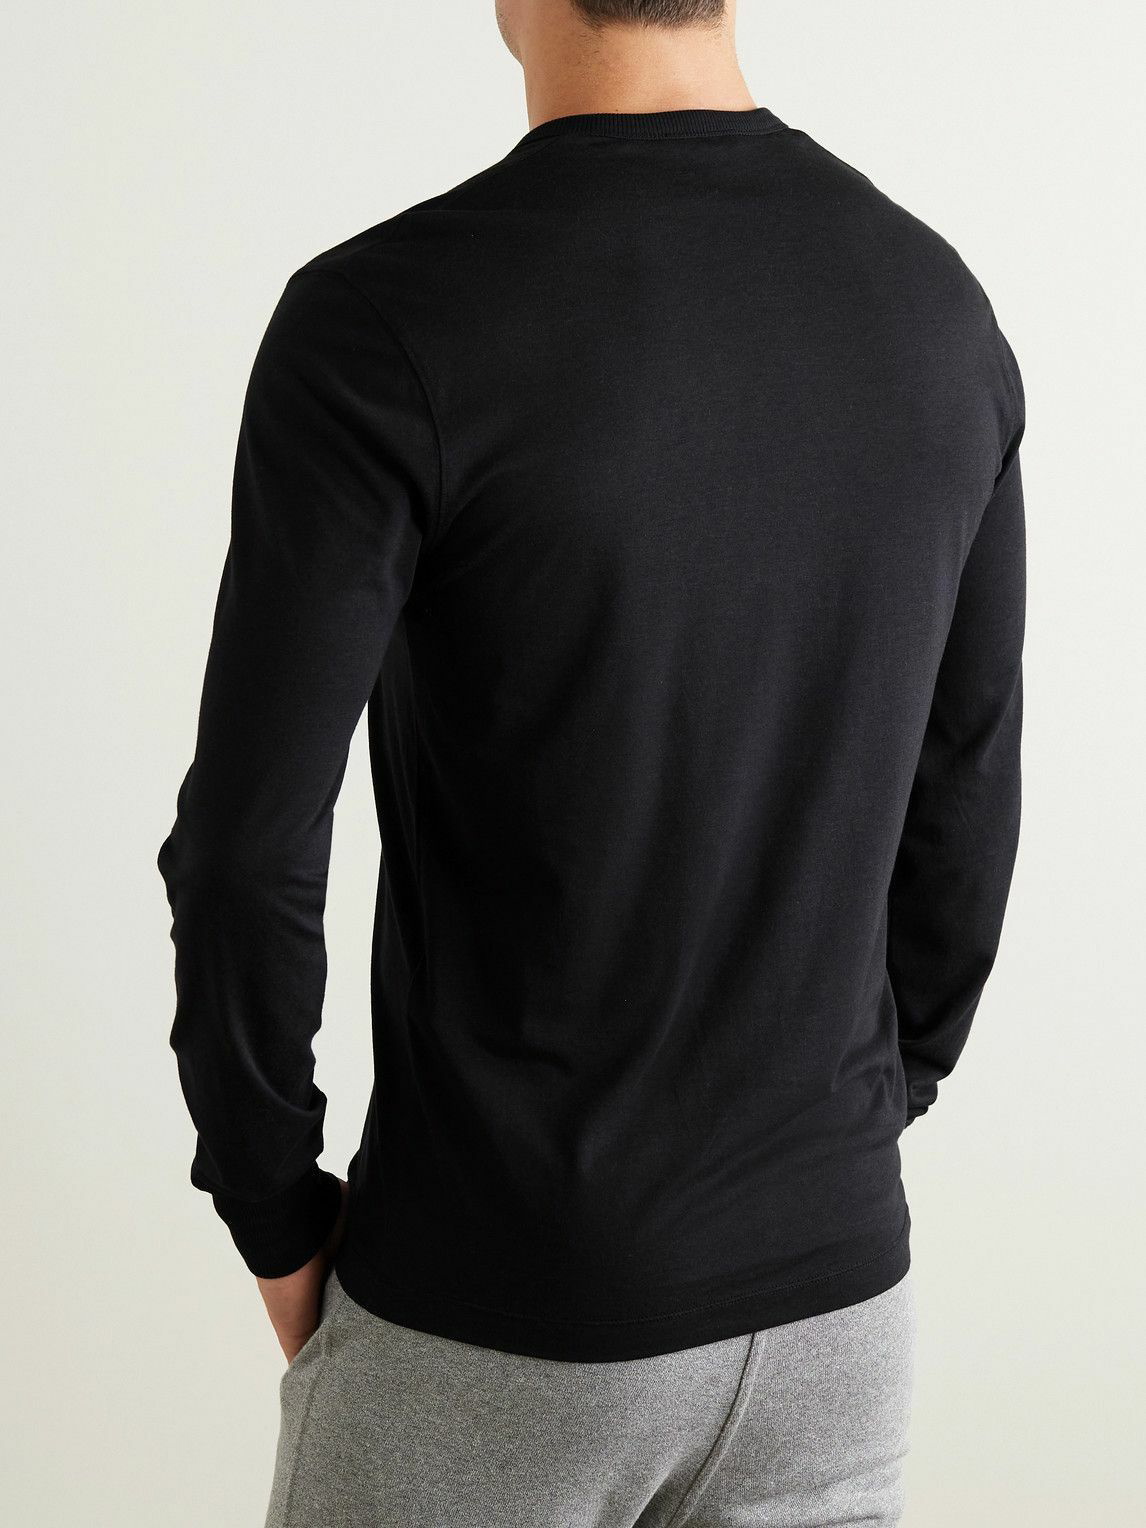 TOM FORD long-sleeve lyocell blend shirt - Black